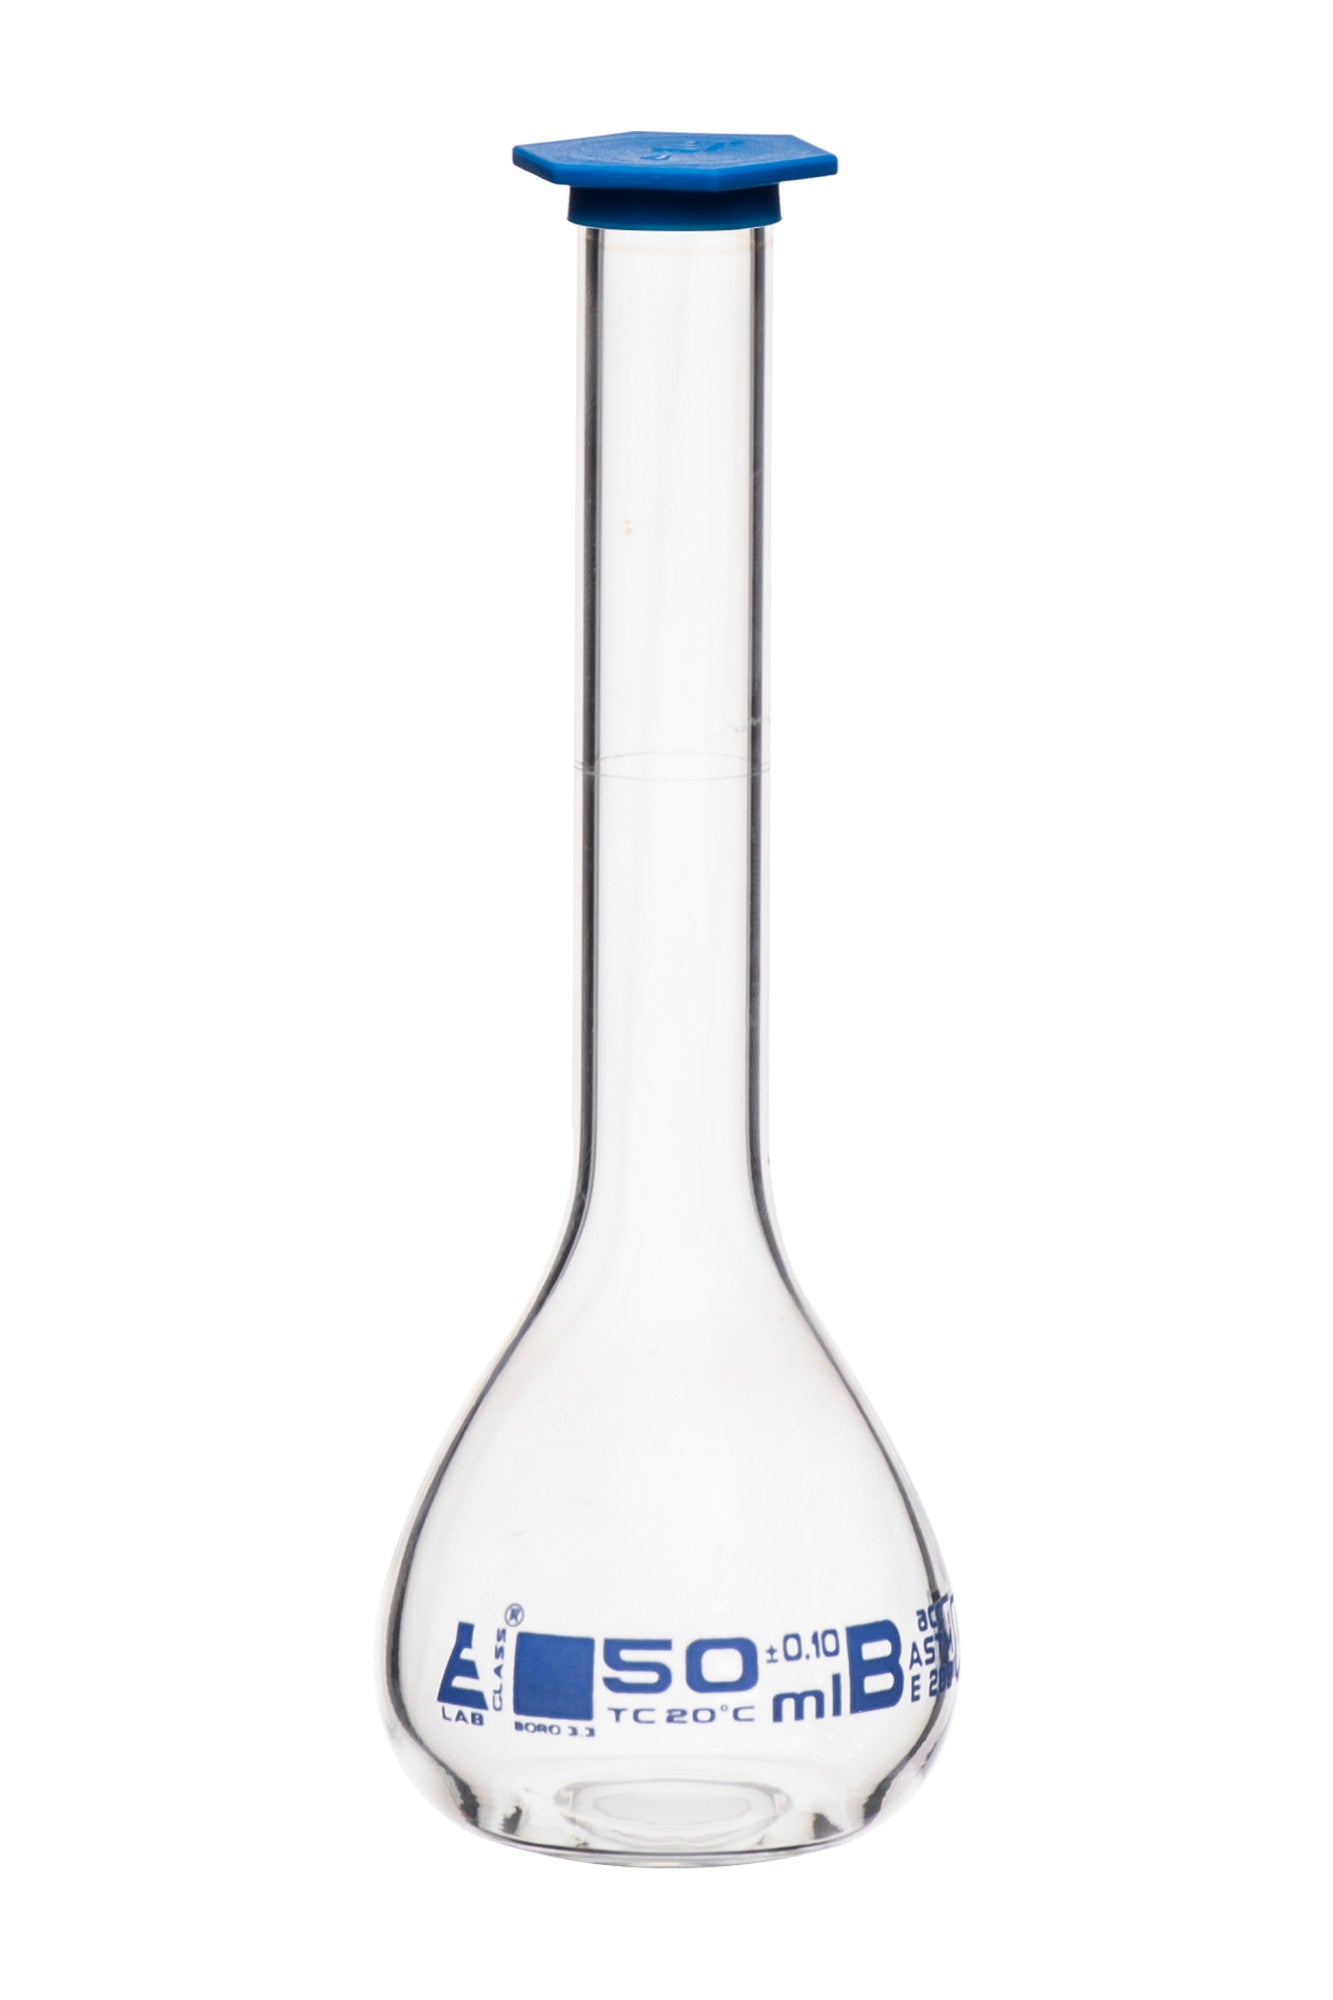 Borosilicate Volumetric Flask with Polyethylene Snap Cap, 50 ml, Class B, Blue Print, ASTM, Autoclavable